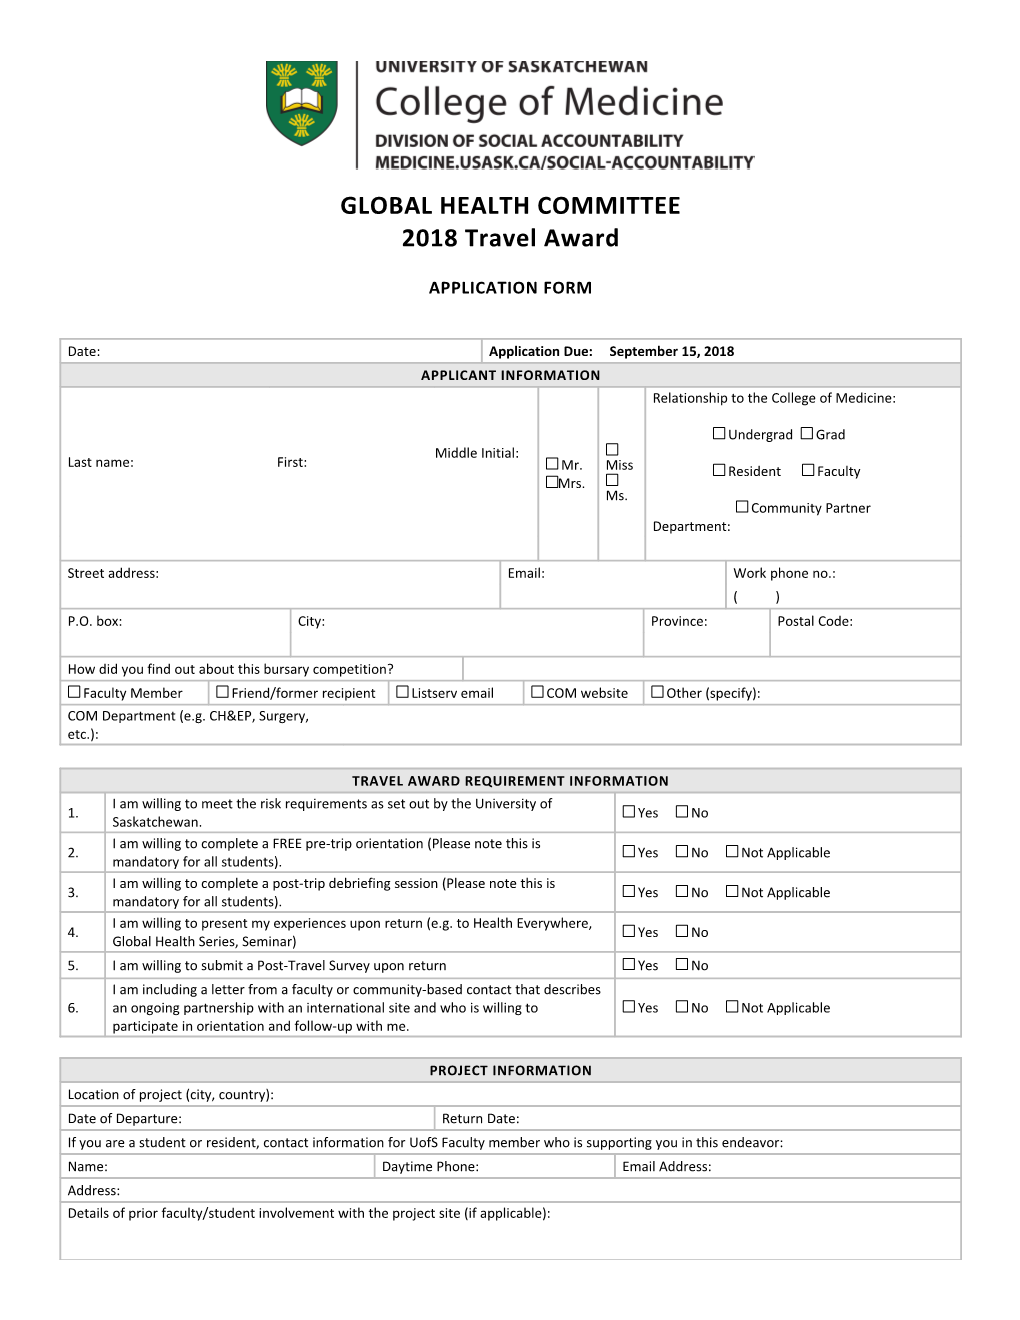 Global Health Travel Bursary Application Form